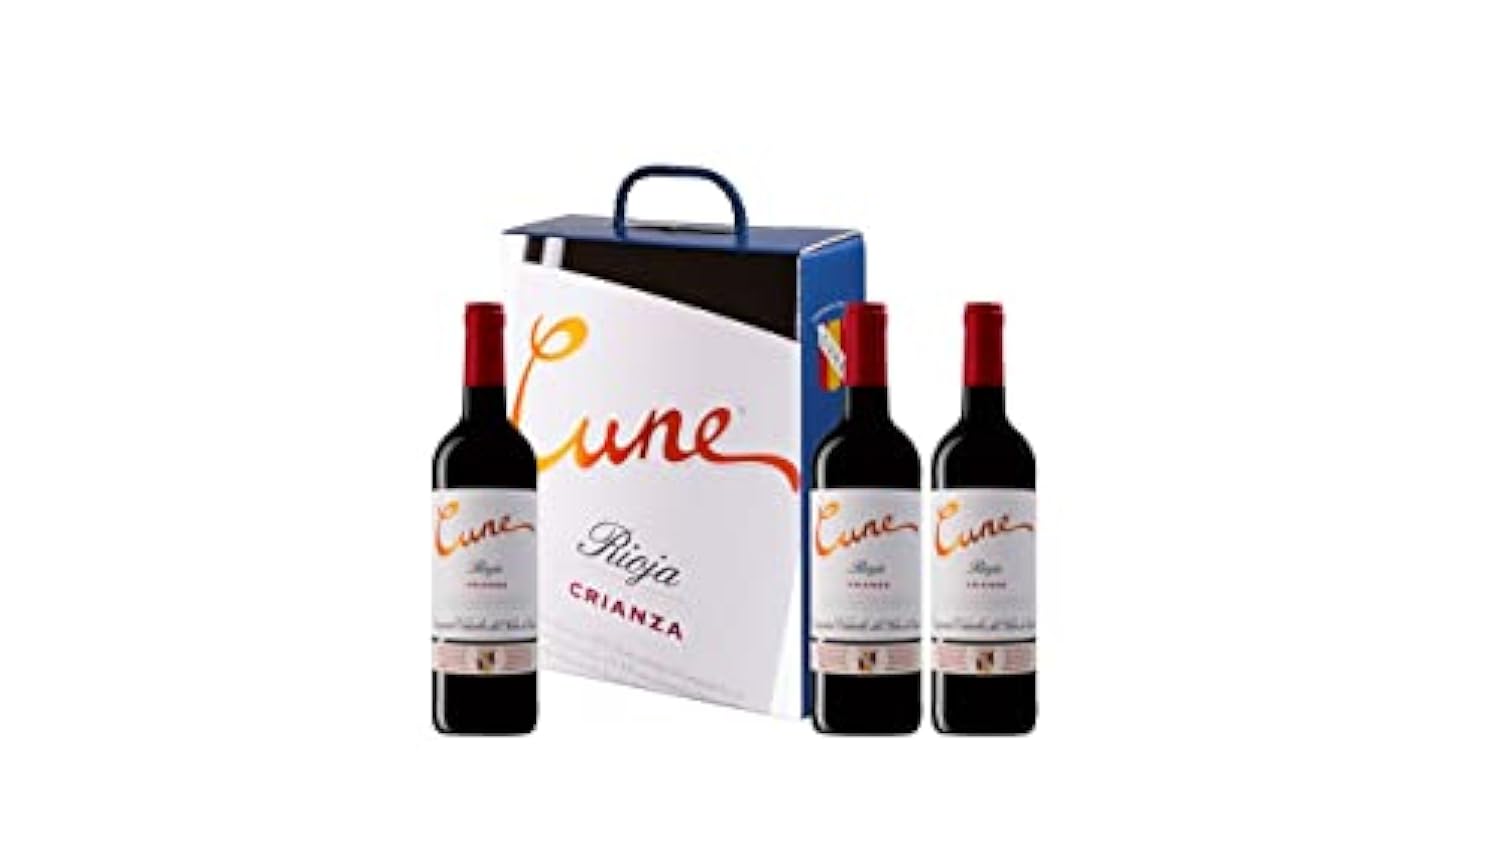 Cune Crianza DO Rioja Vino Tinto, 3 x 75cl bBFzJSfm